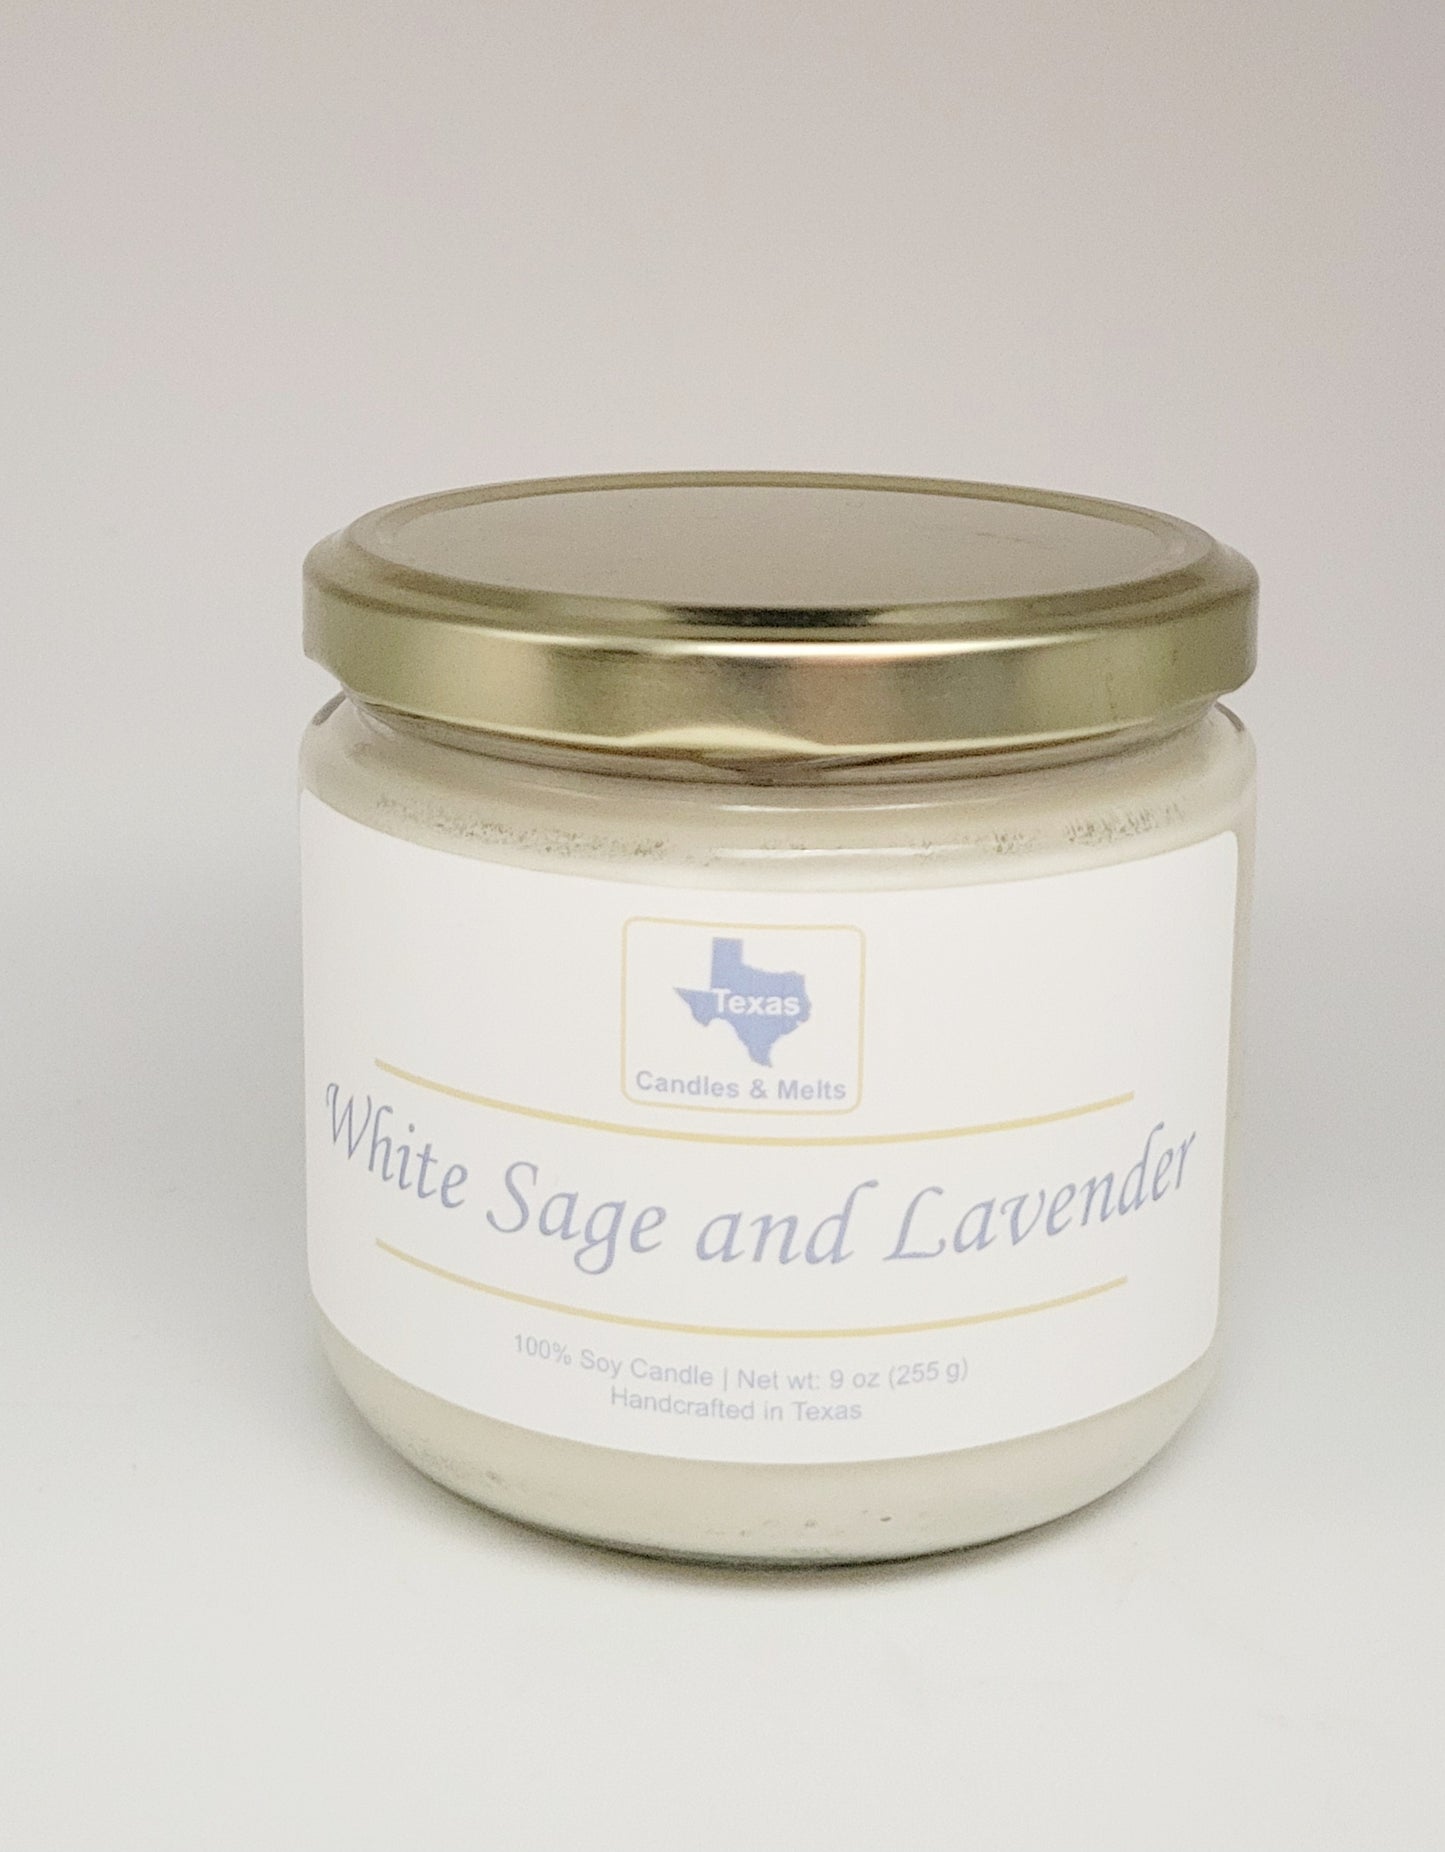 White Sage and Lavendar